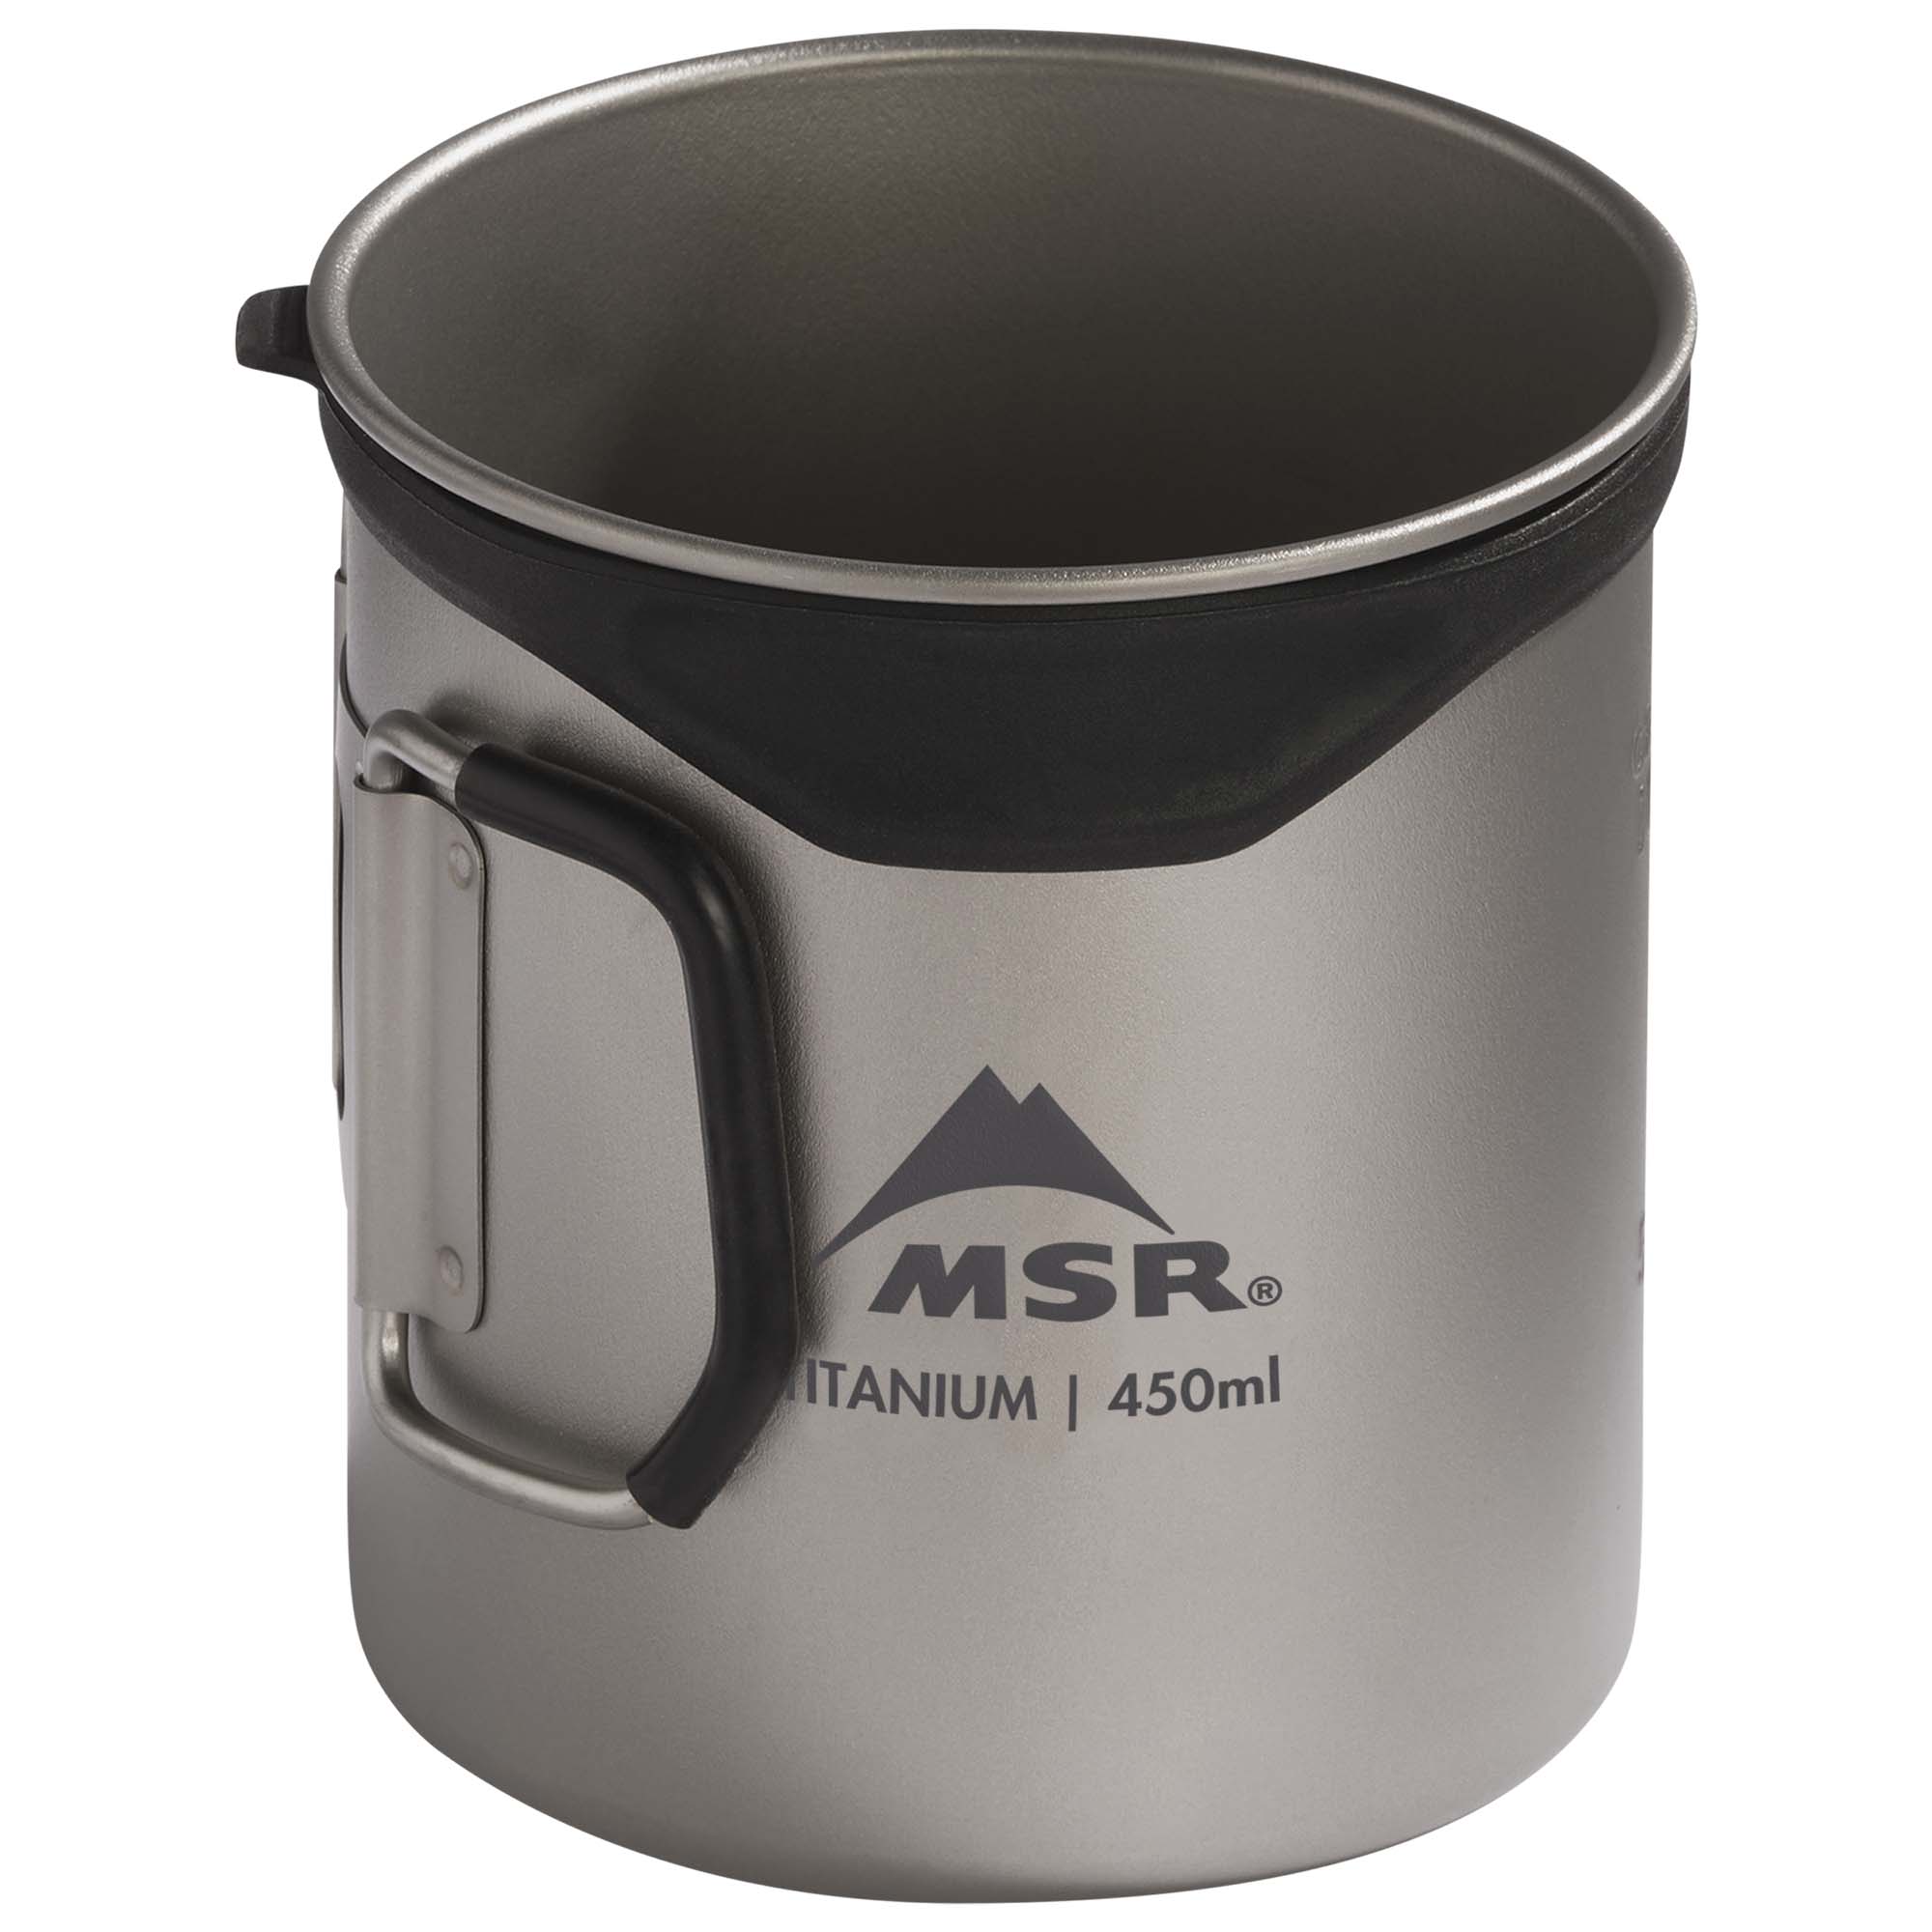 MSR Titan Cup Ultralight Backpacking Pot/Mug